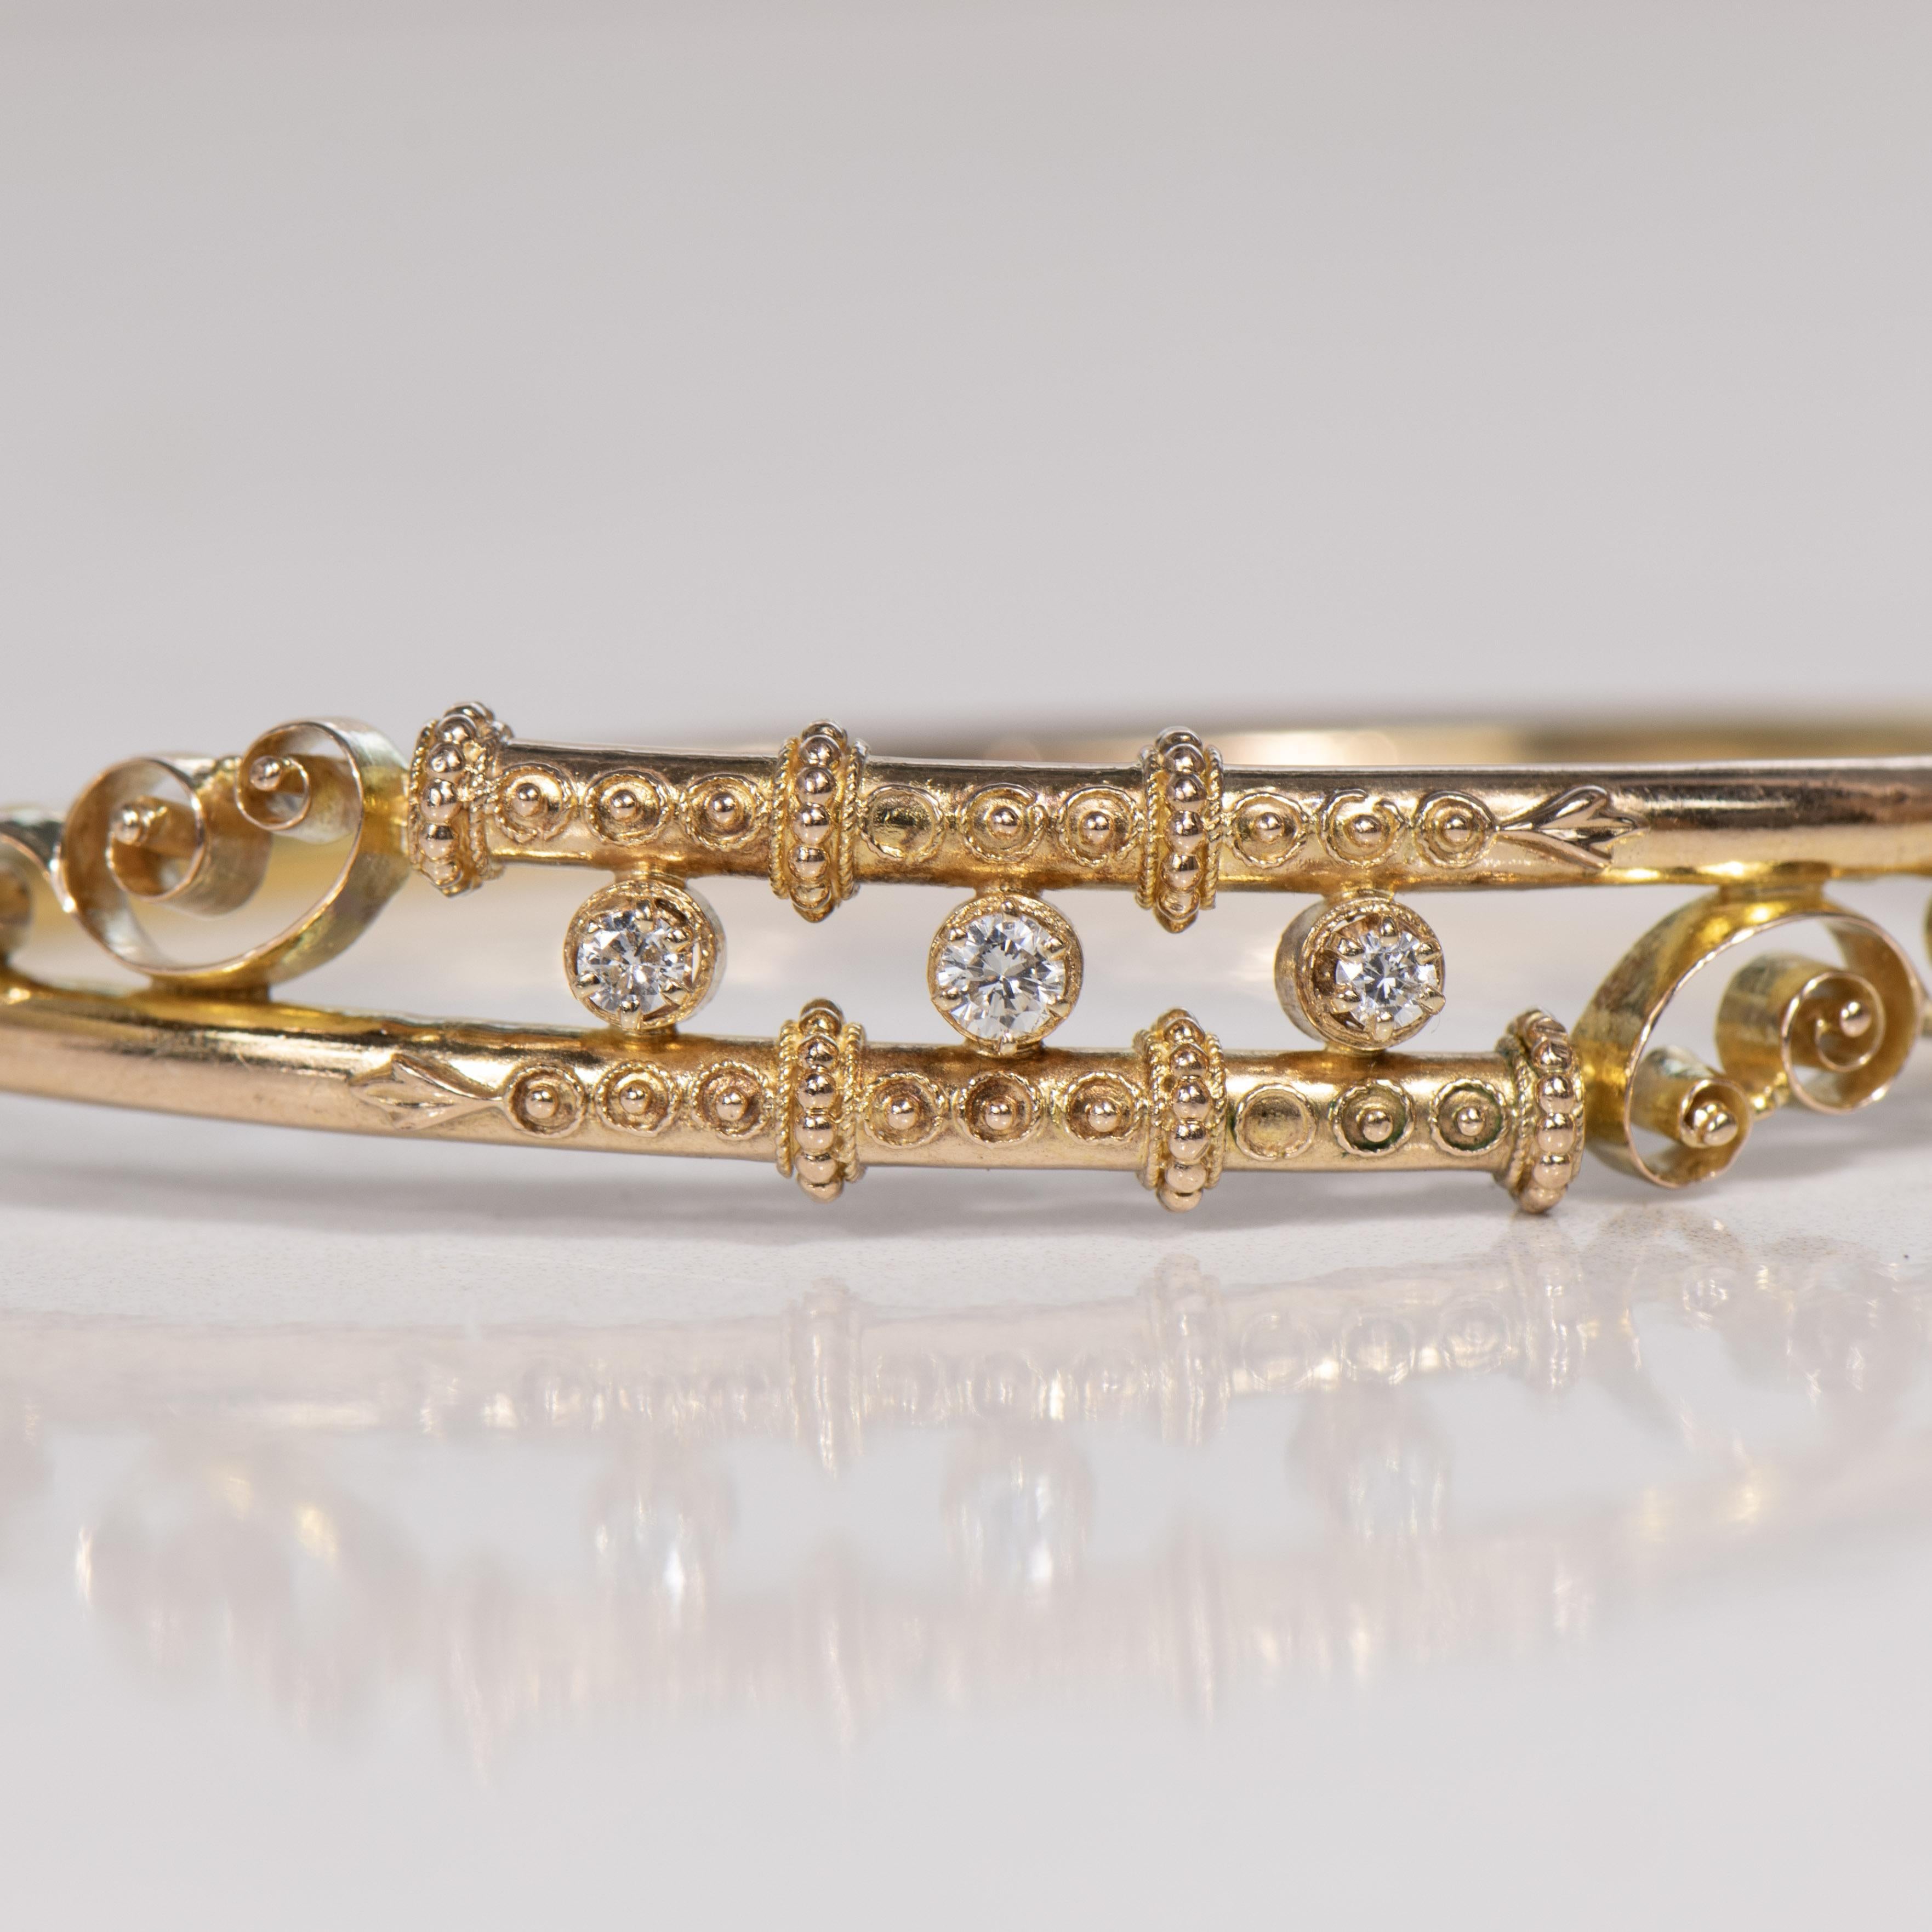 Round Cut Victorian Etruscan Revival Diamond Bypass Bangle Bracelet